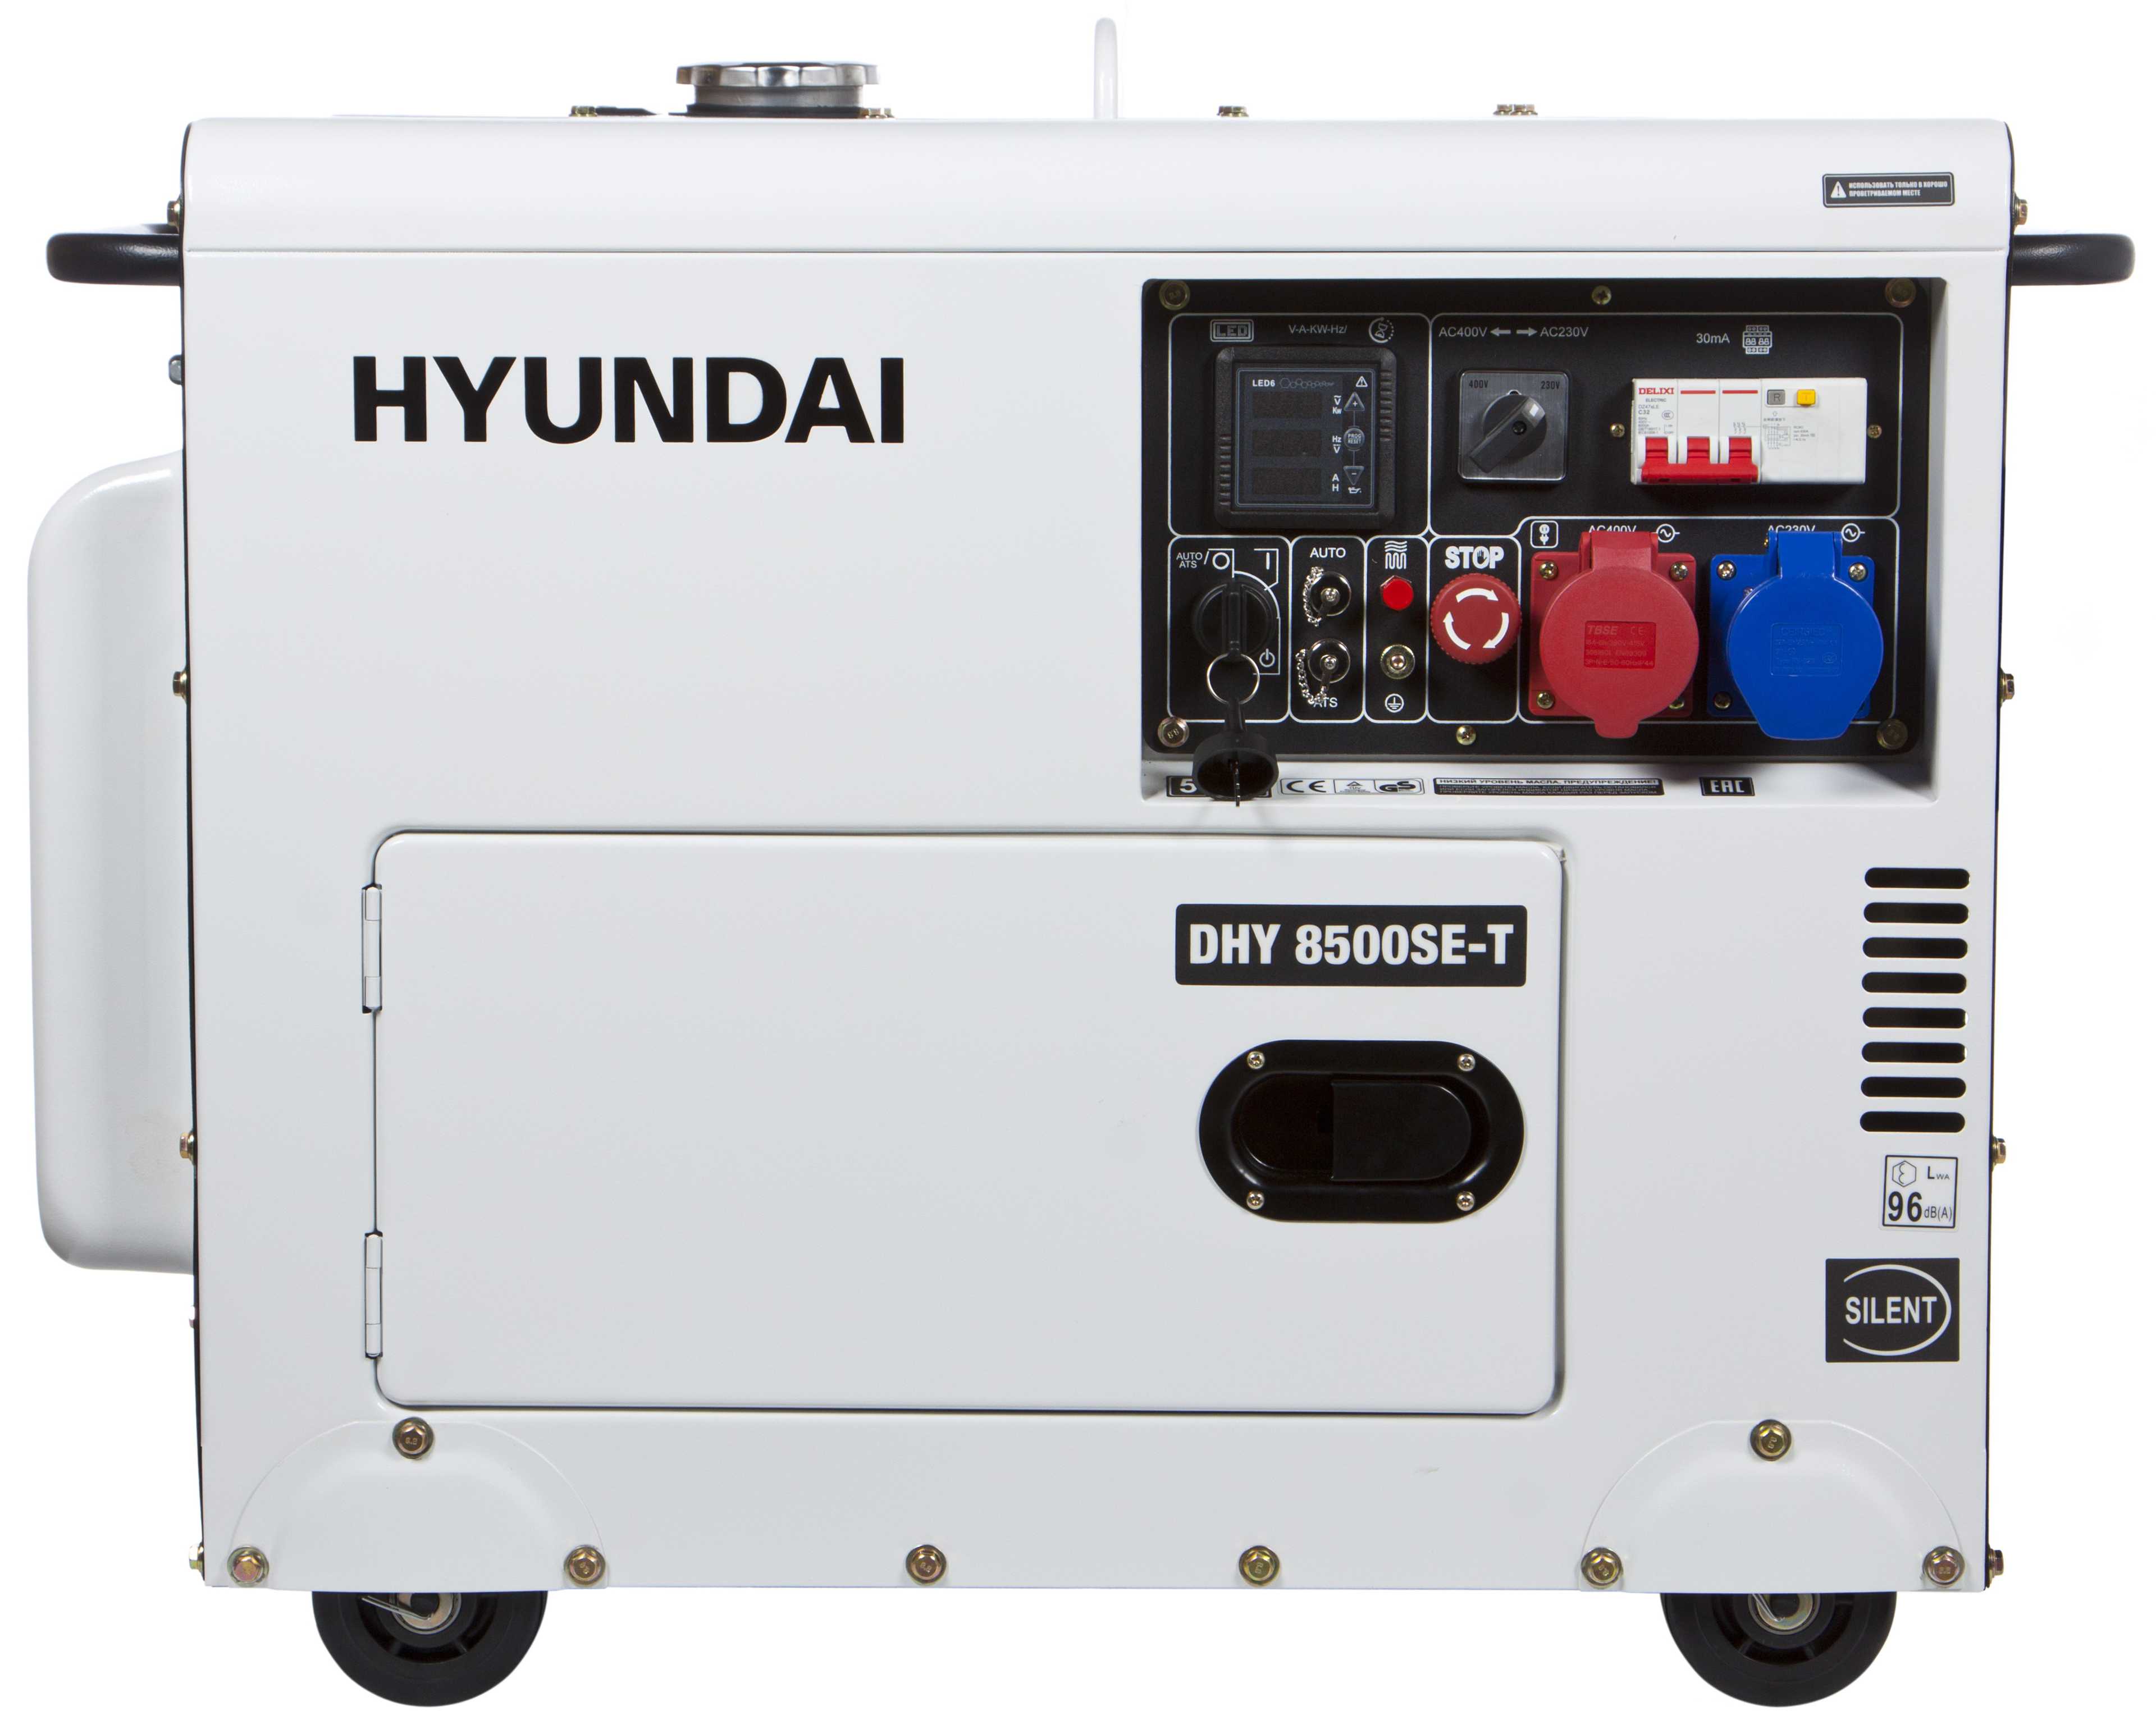 Hyundai dhy-6000 le